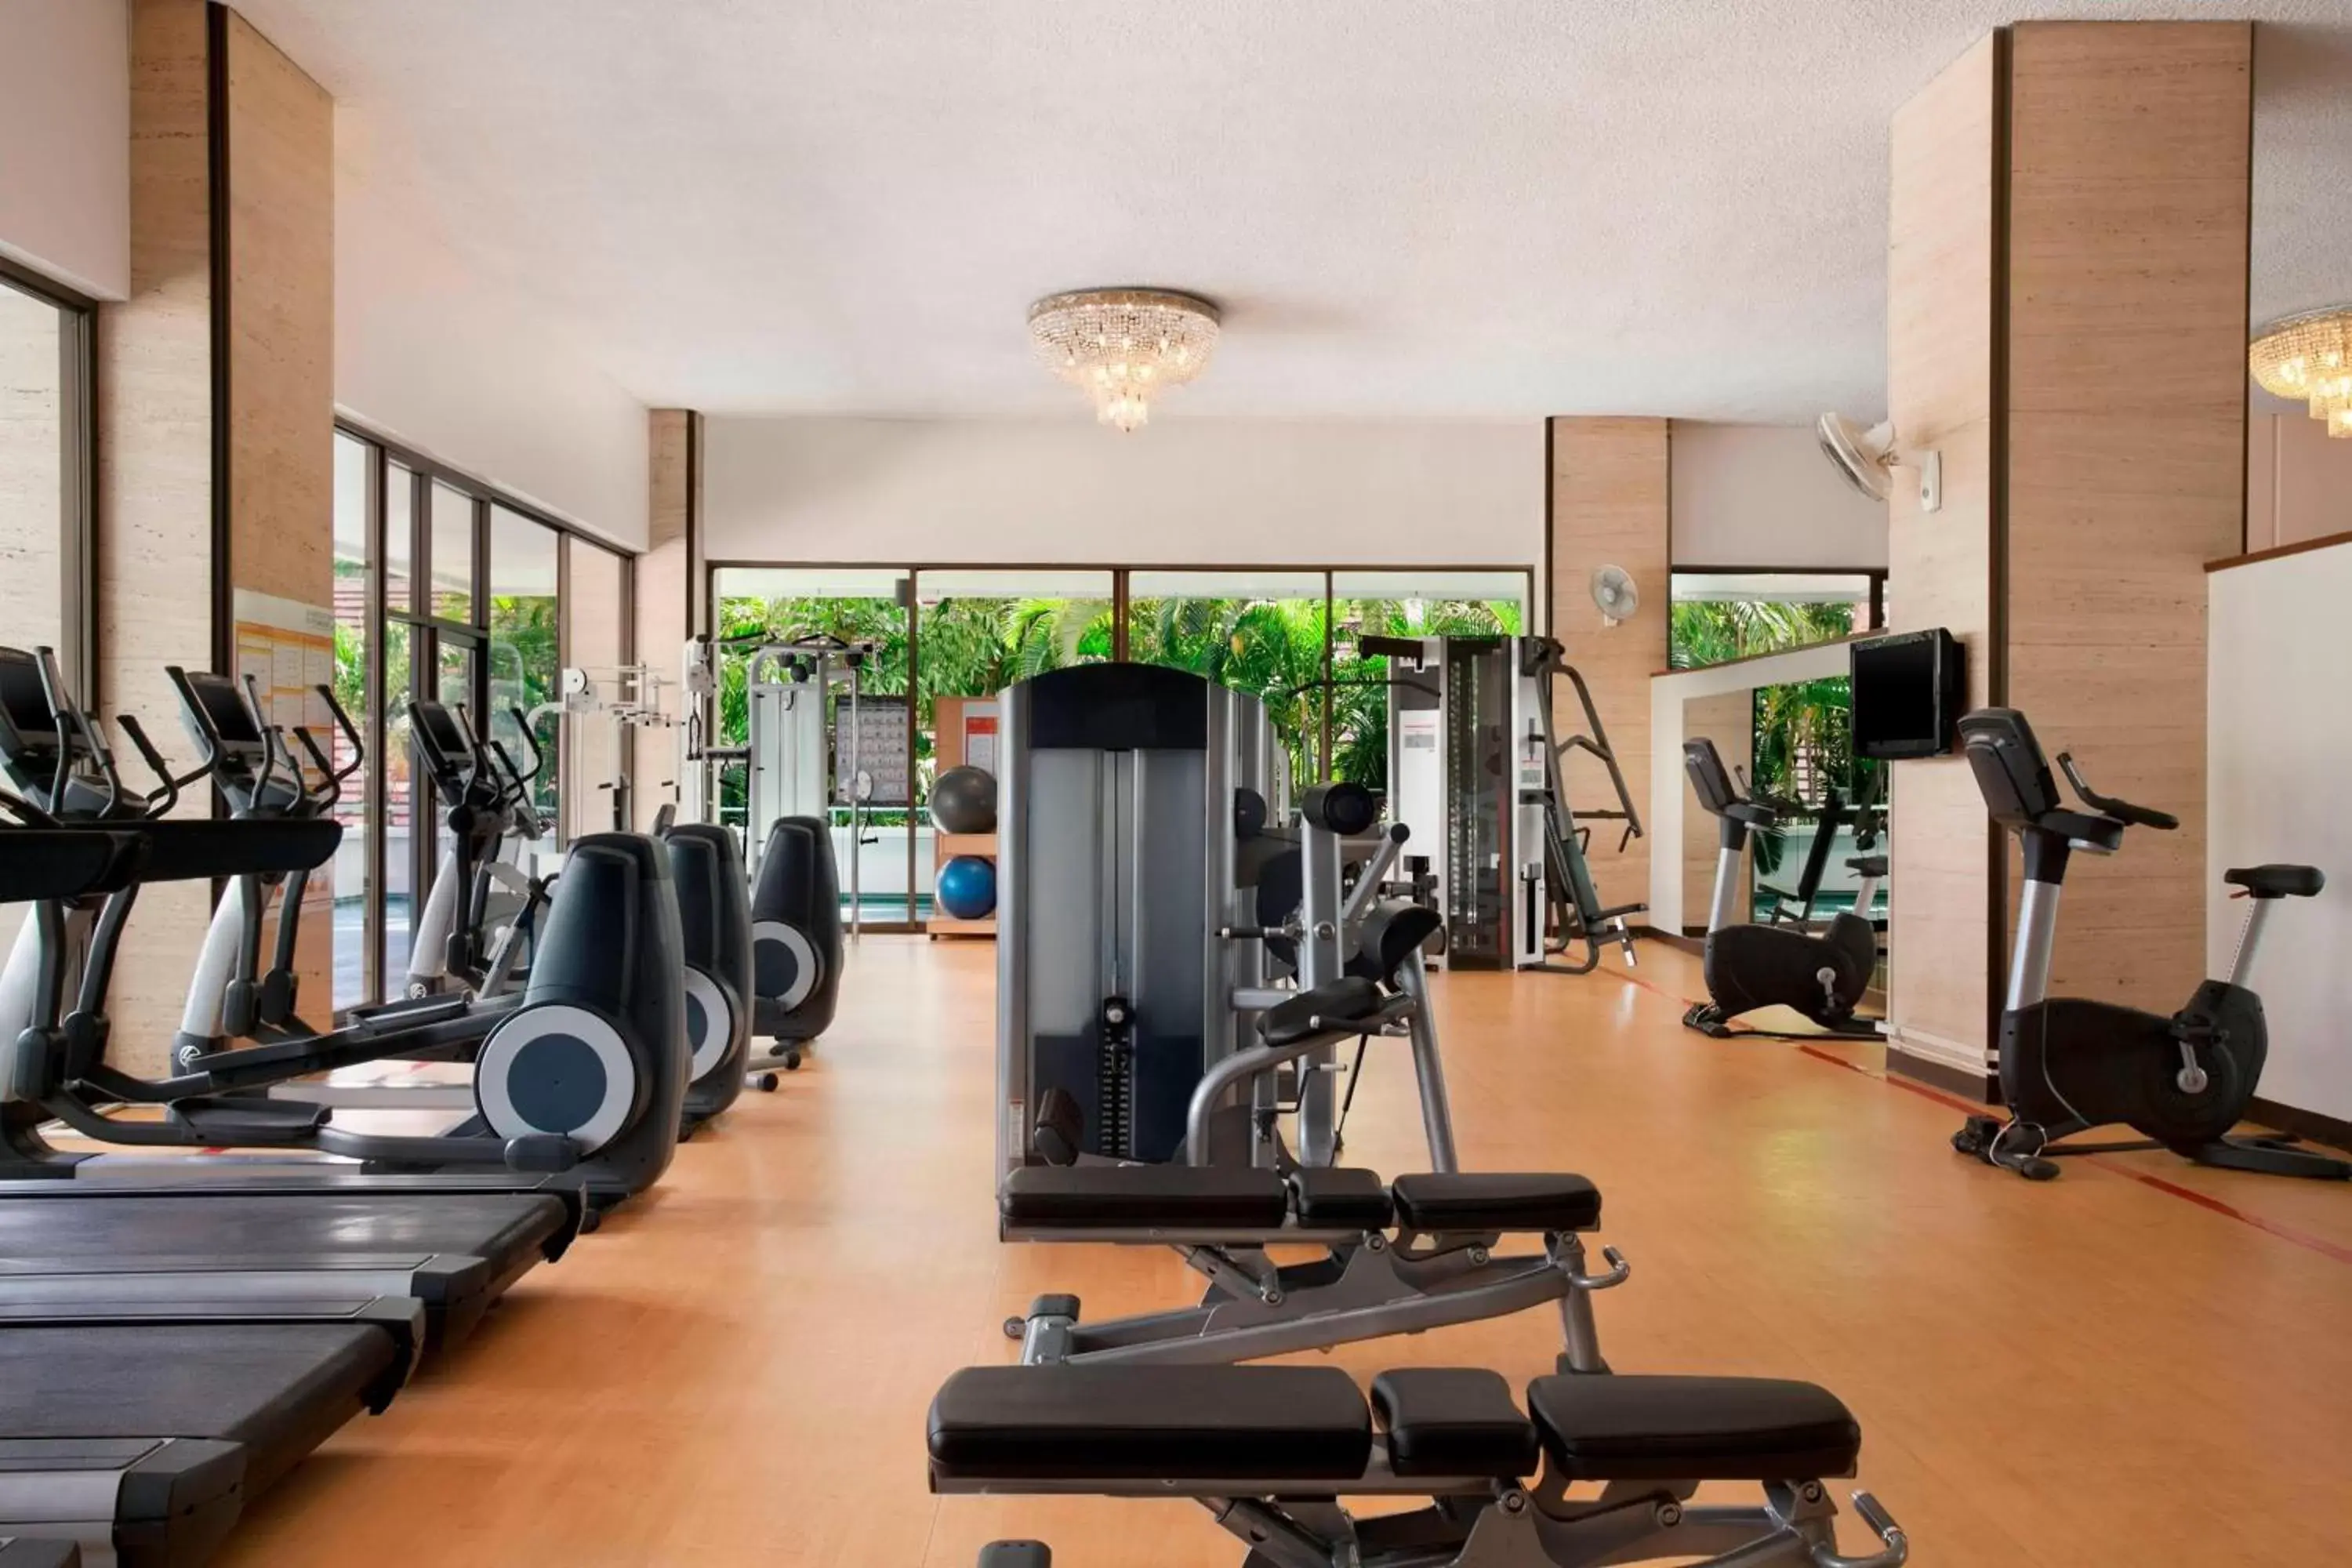 Fitness centre/facilities, Fitness Center/Facilities in Sheraton Princess Kaiulani